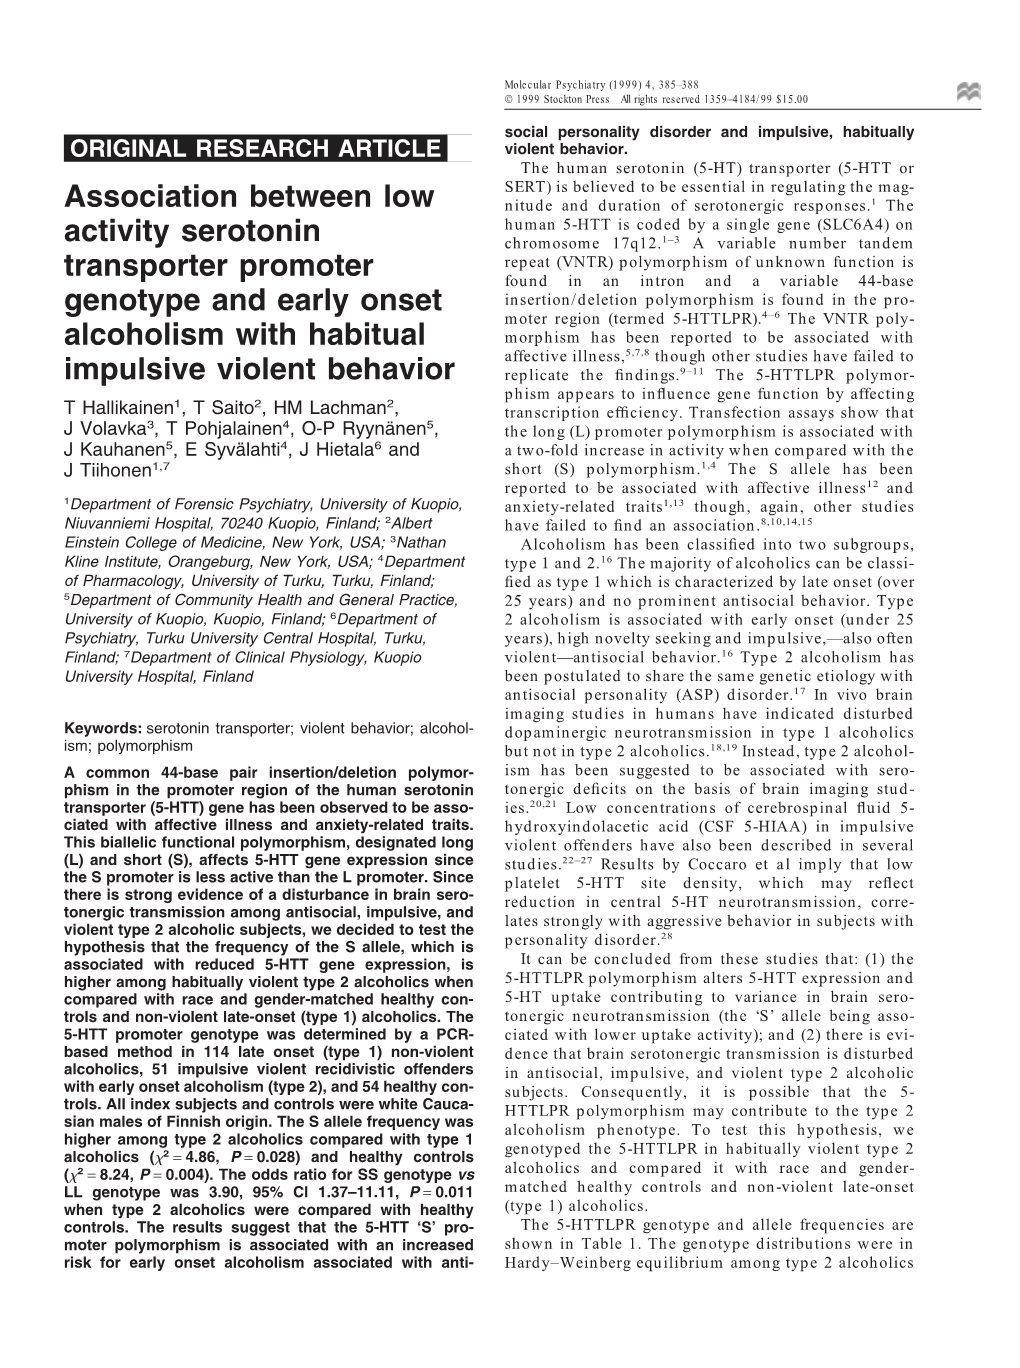 Association Between Low Activity Serotonin Transporter Promoter